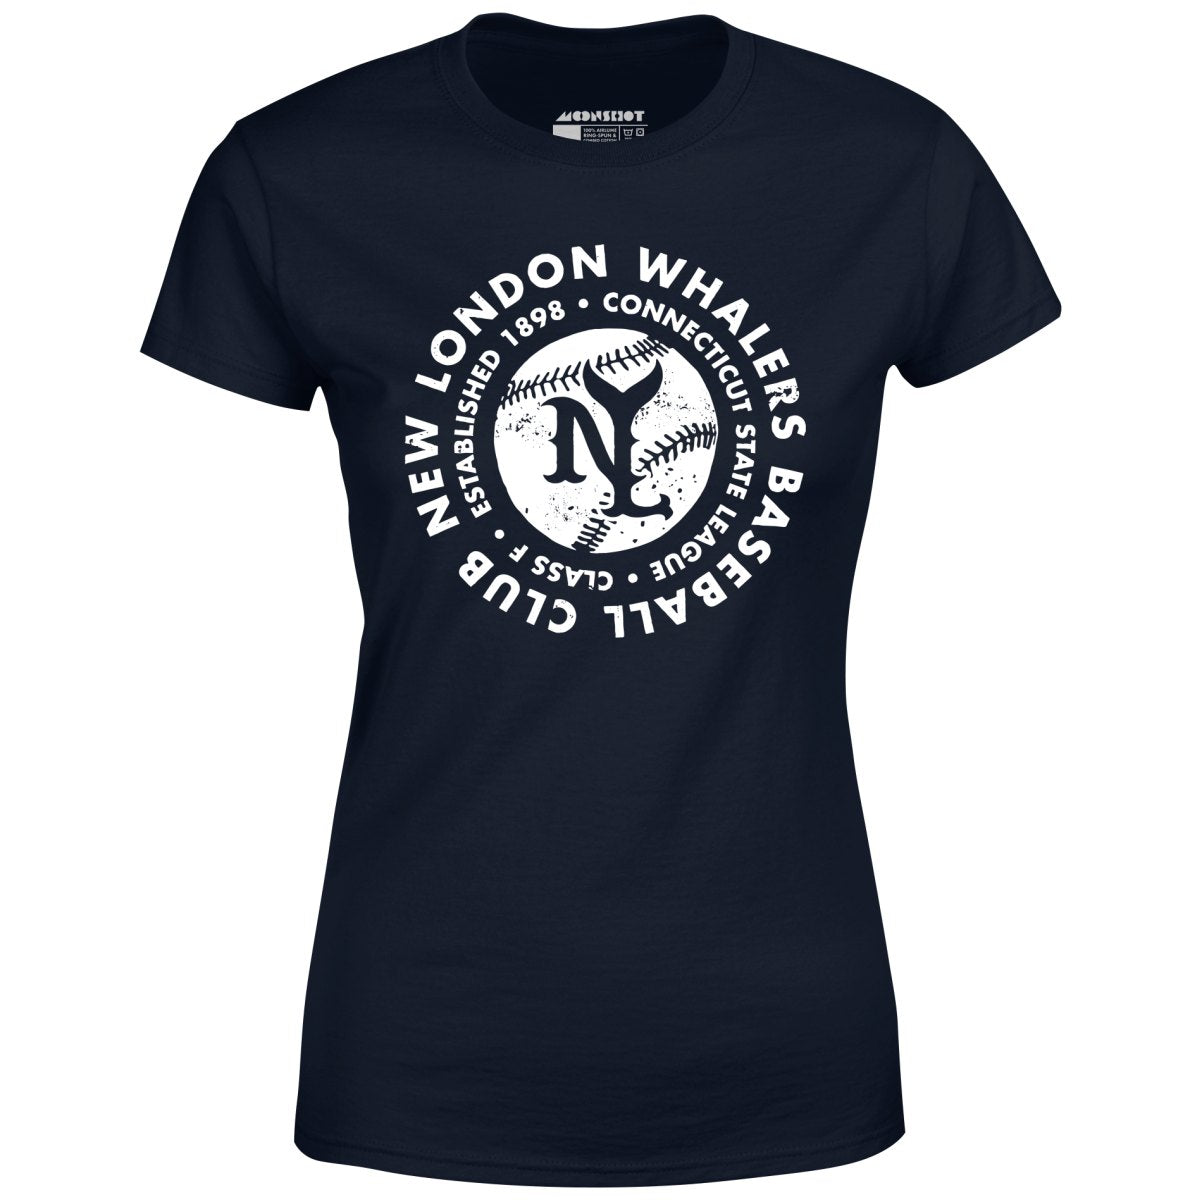 New London Whalers - Connecticut - Vintage Defunct Baseball Teams - Women's T-Shirt